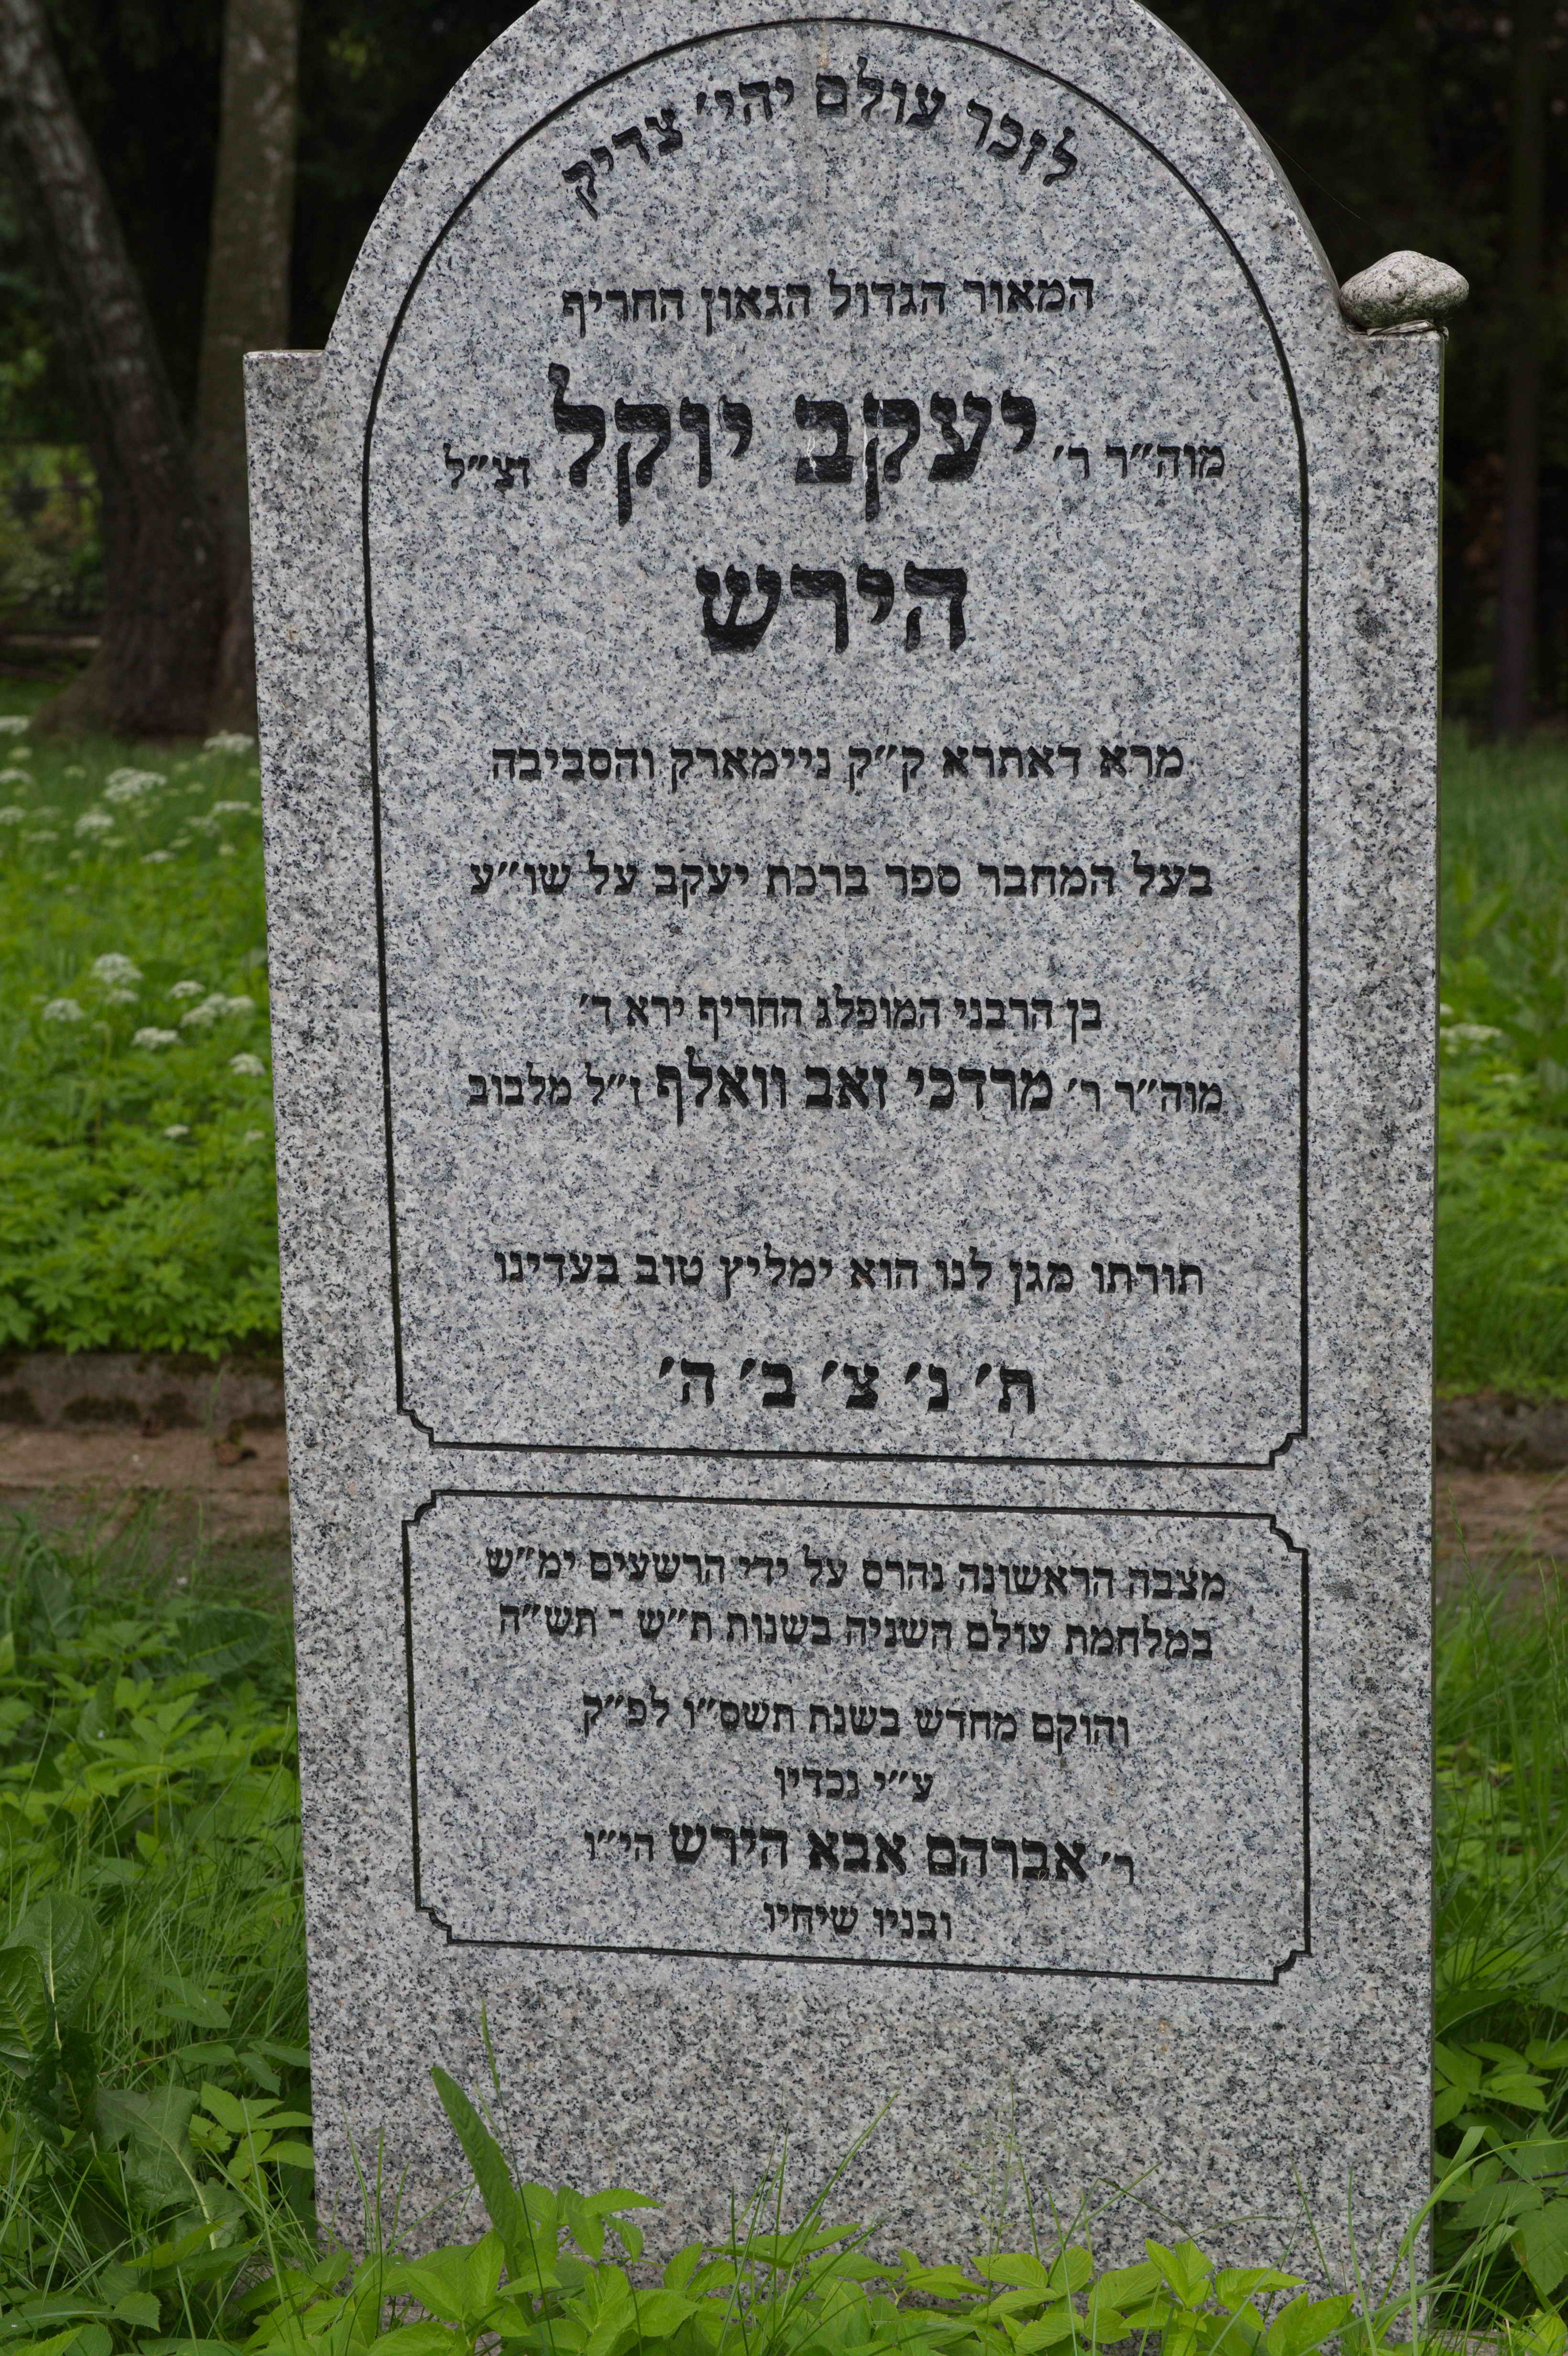 Rabbi Hirsch